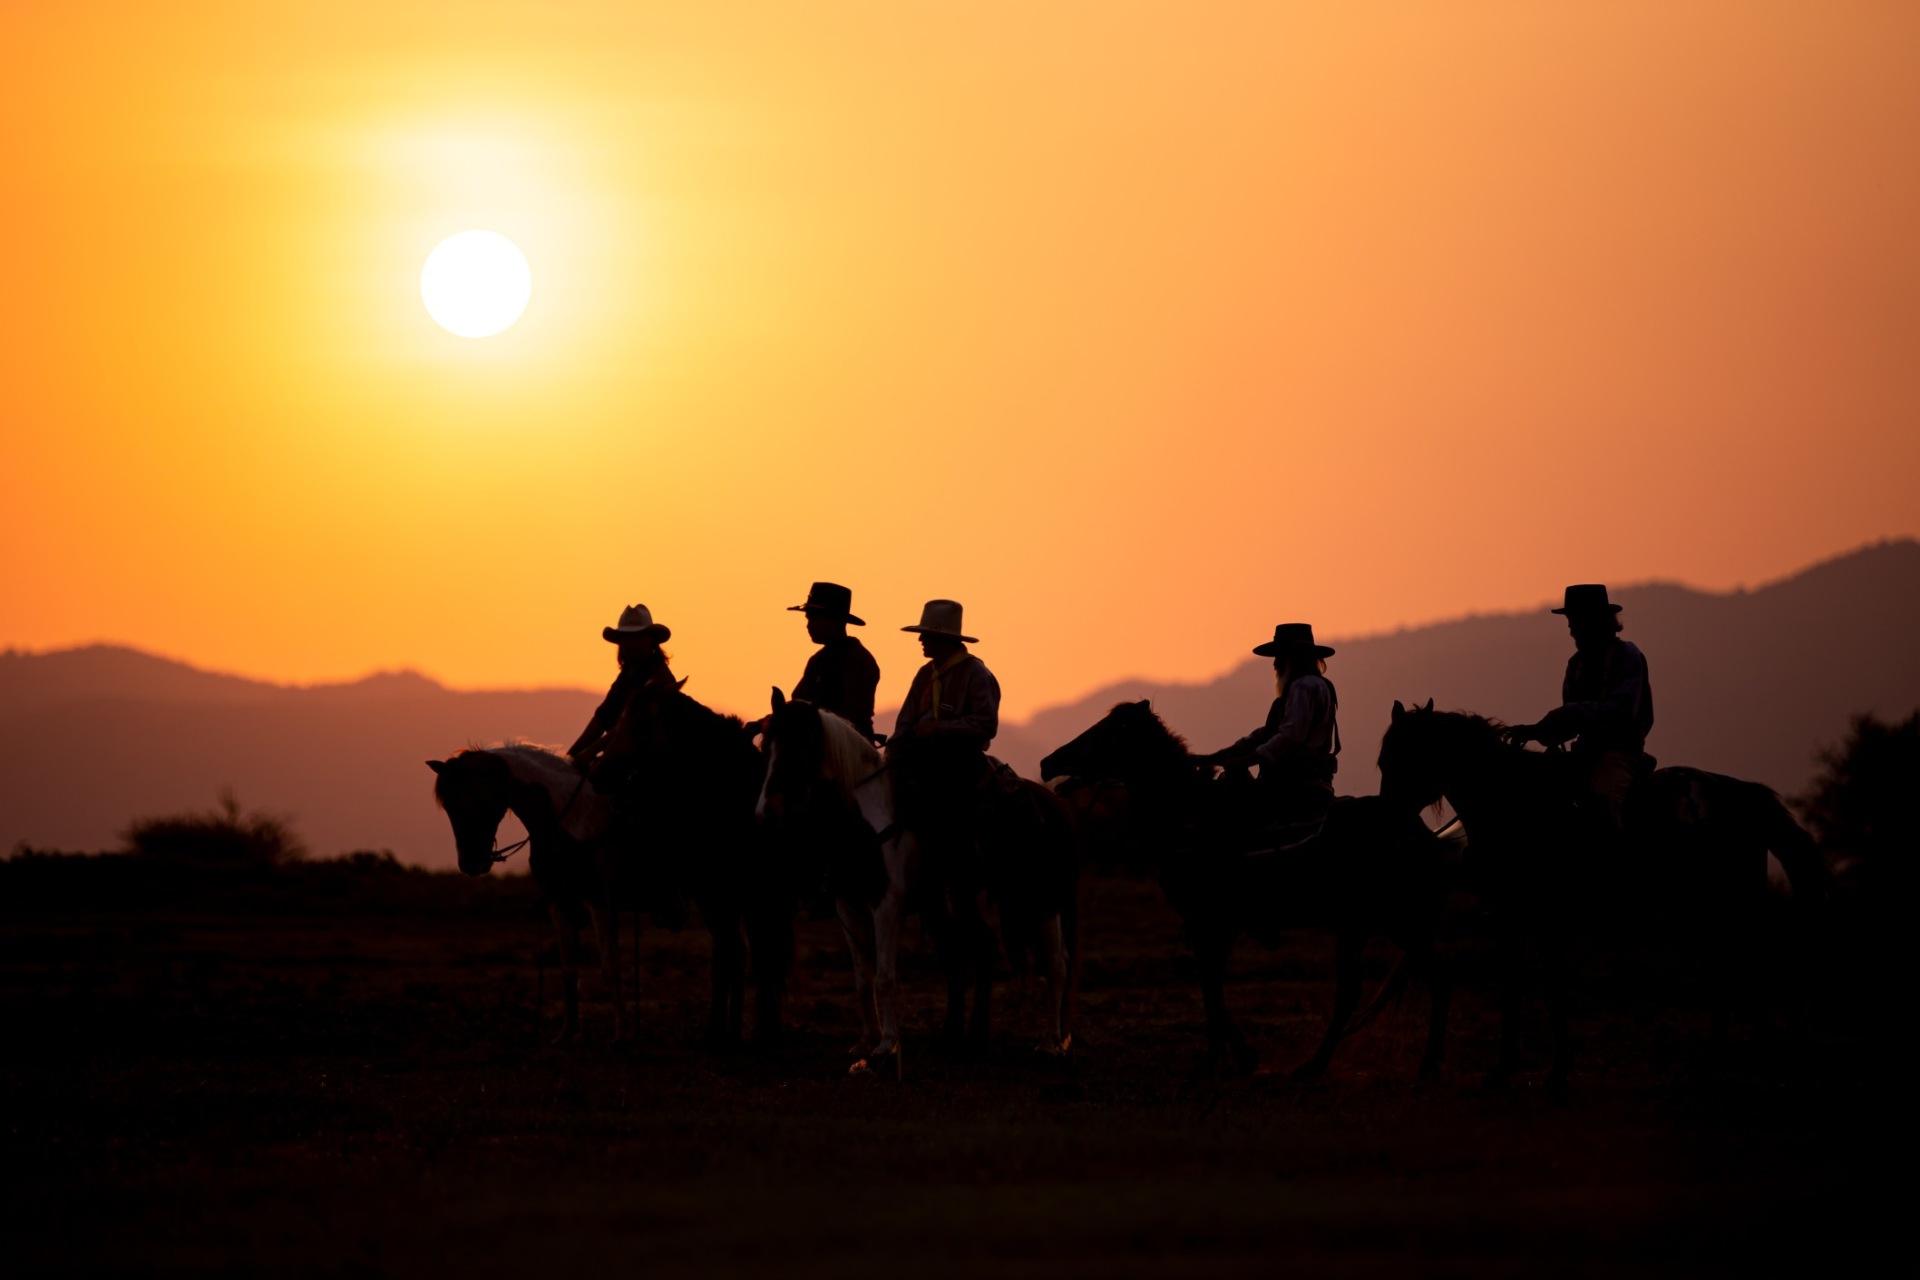 people on horseback in sunset